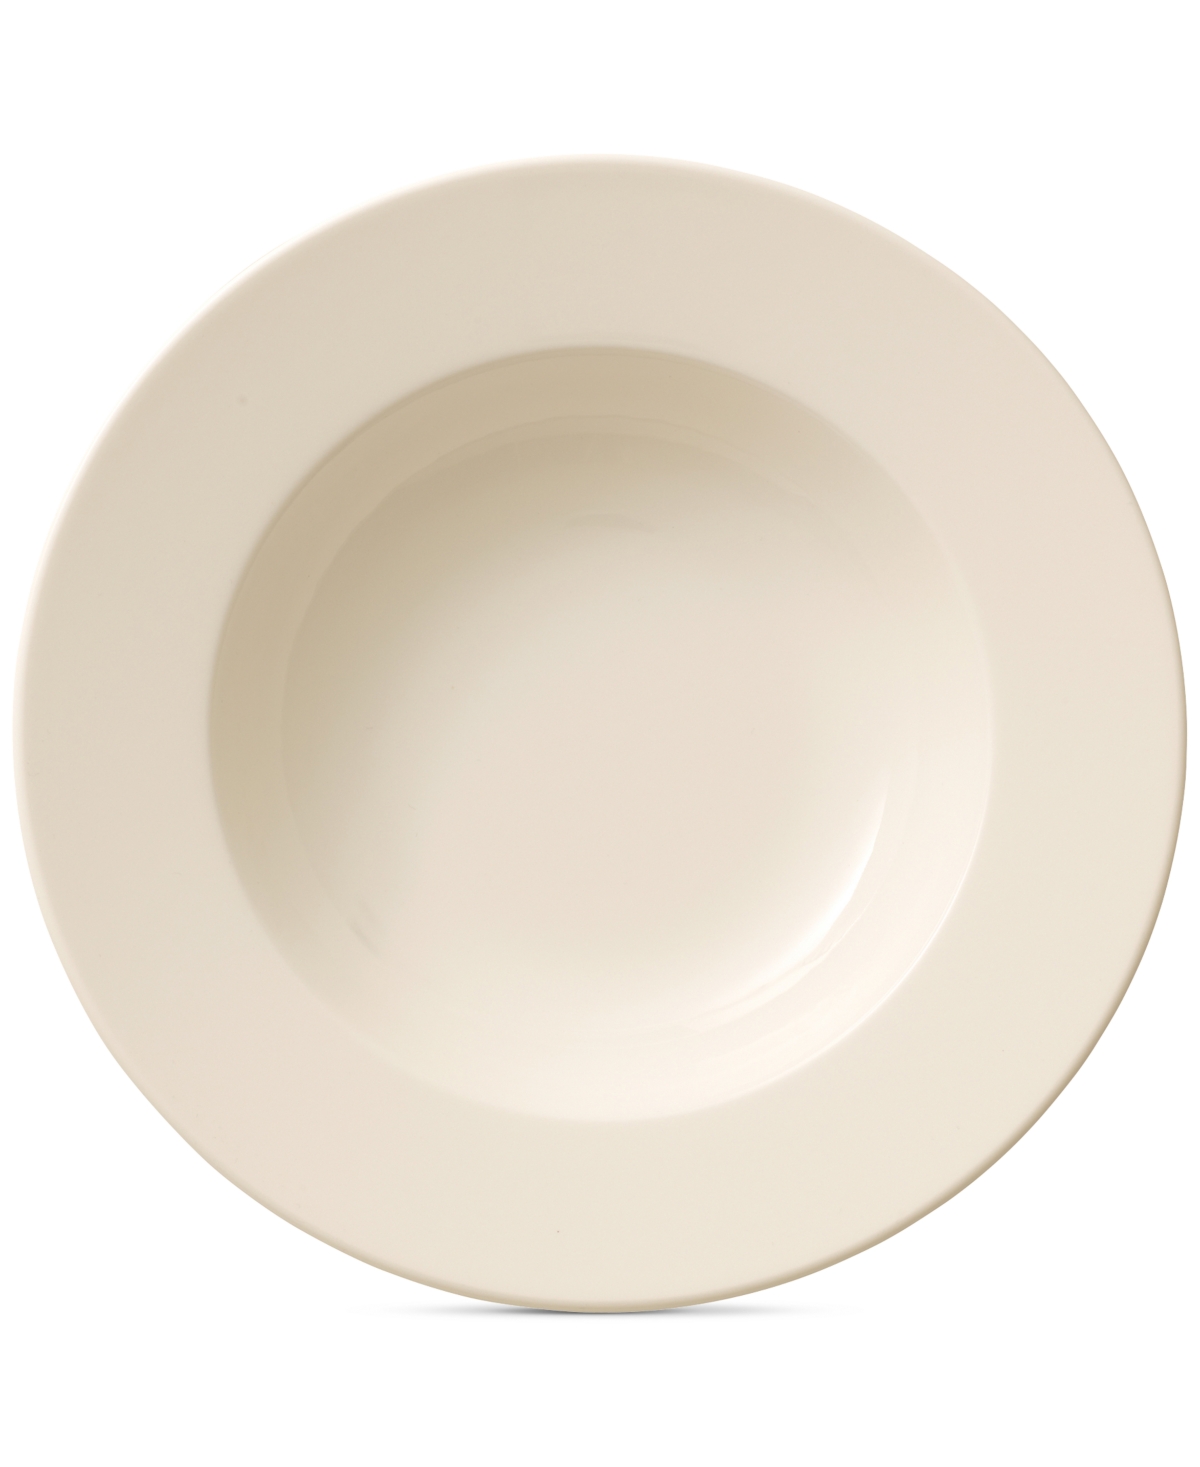 Dinnerware For Me Rim Soup Bowl - White